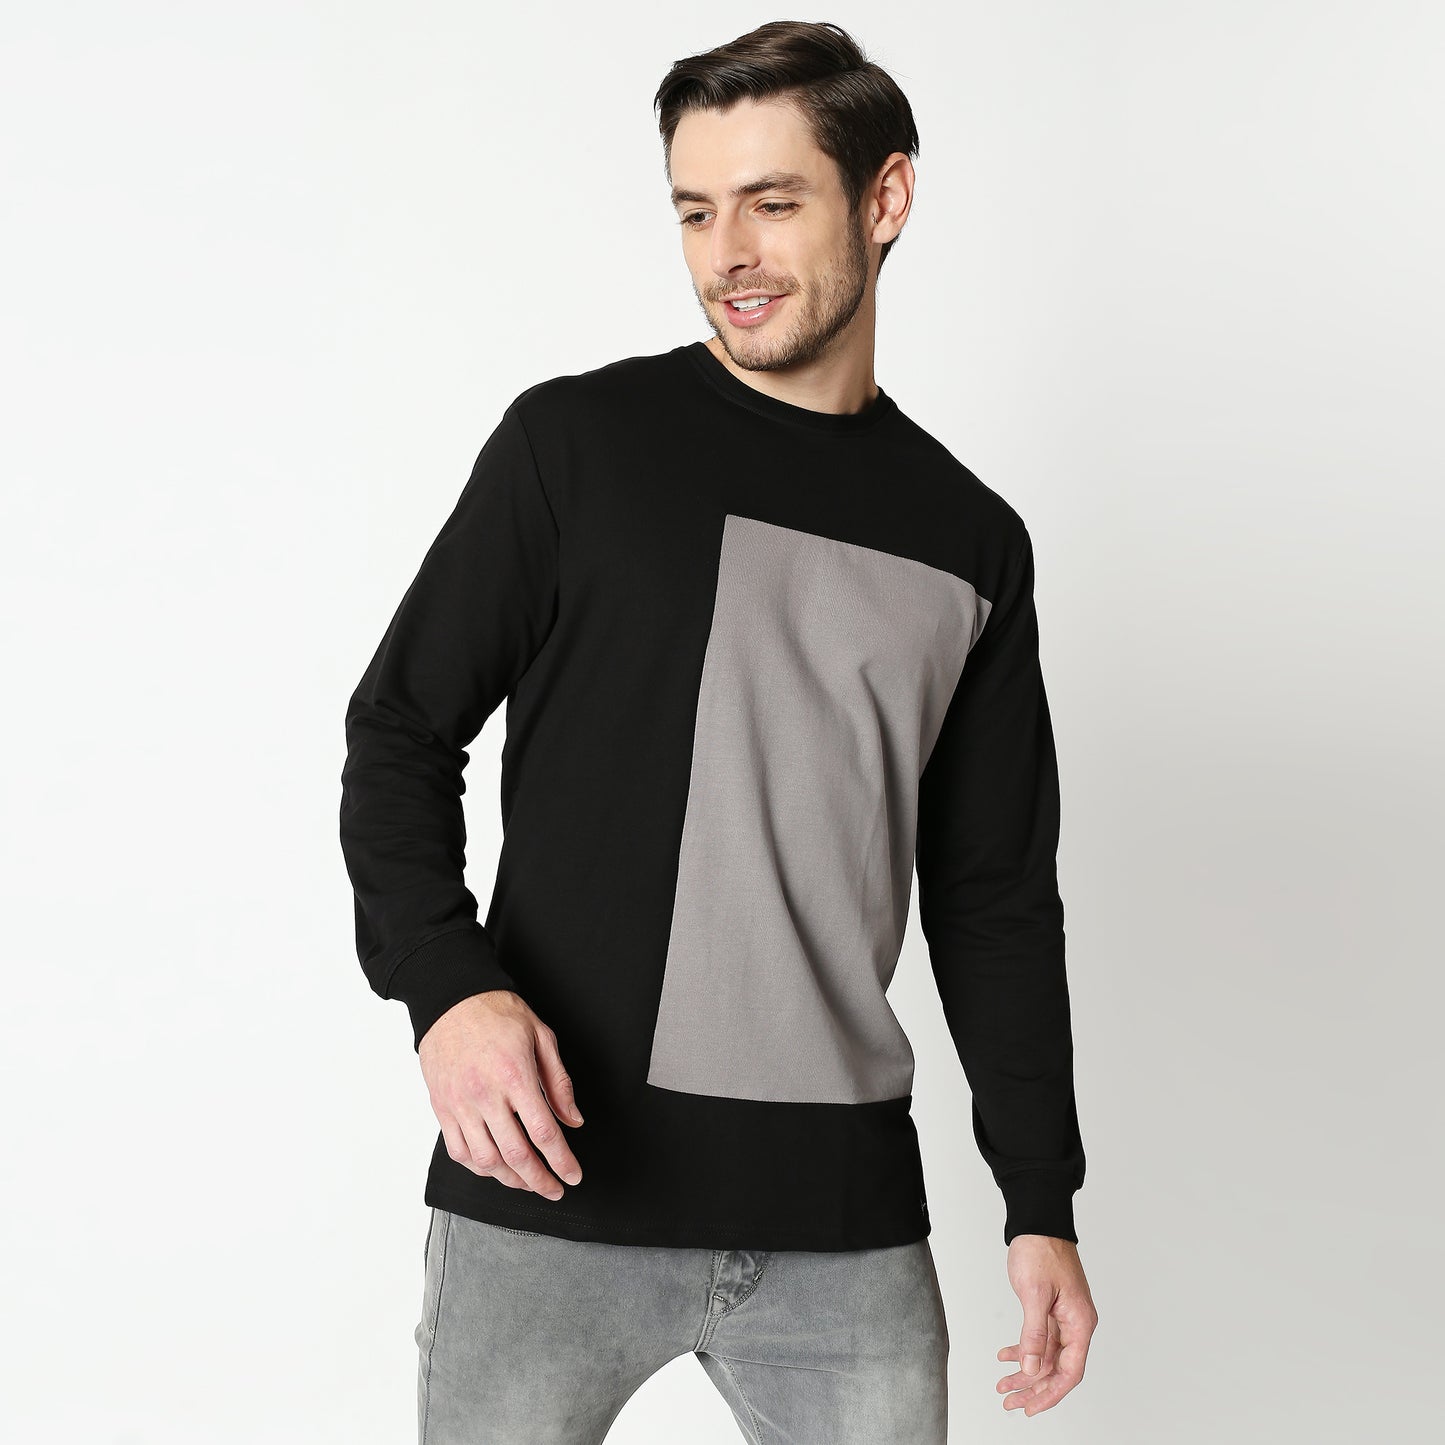 Fostino Black & Grey Pullover Full Sleeves T-Shirt - Fostino - T-Shirts